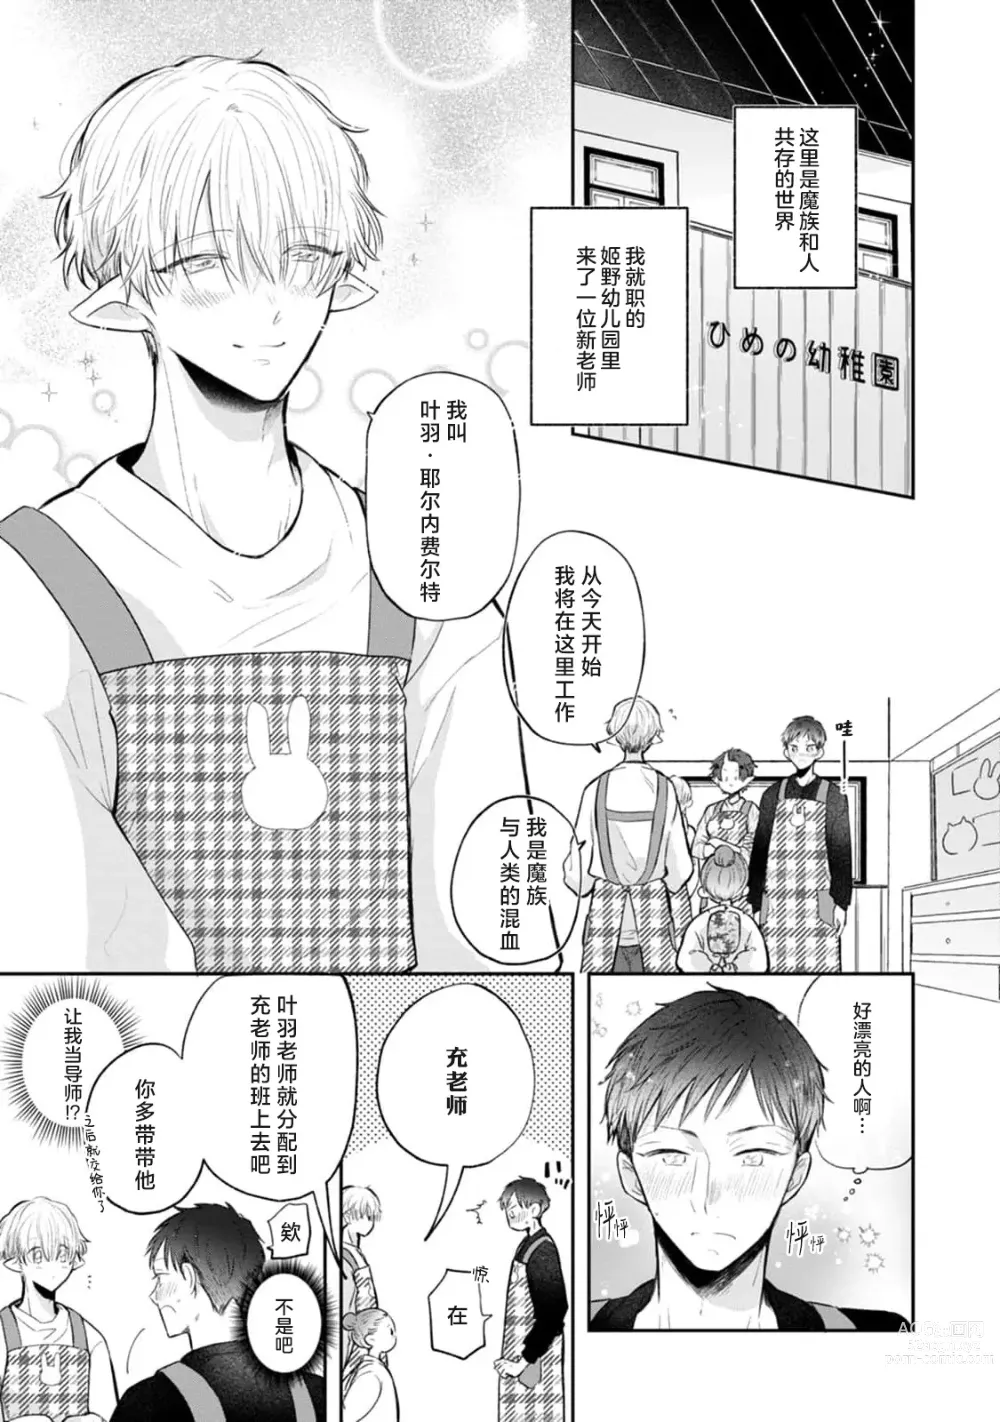 Page 5 of manga 叶羽老师全部是第一次 1-6 end